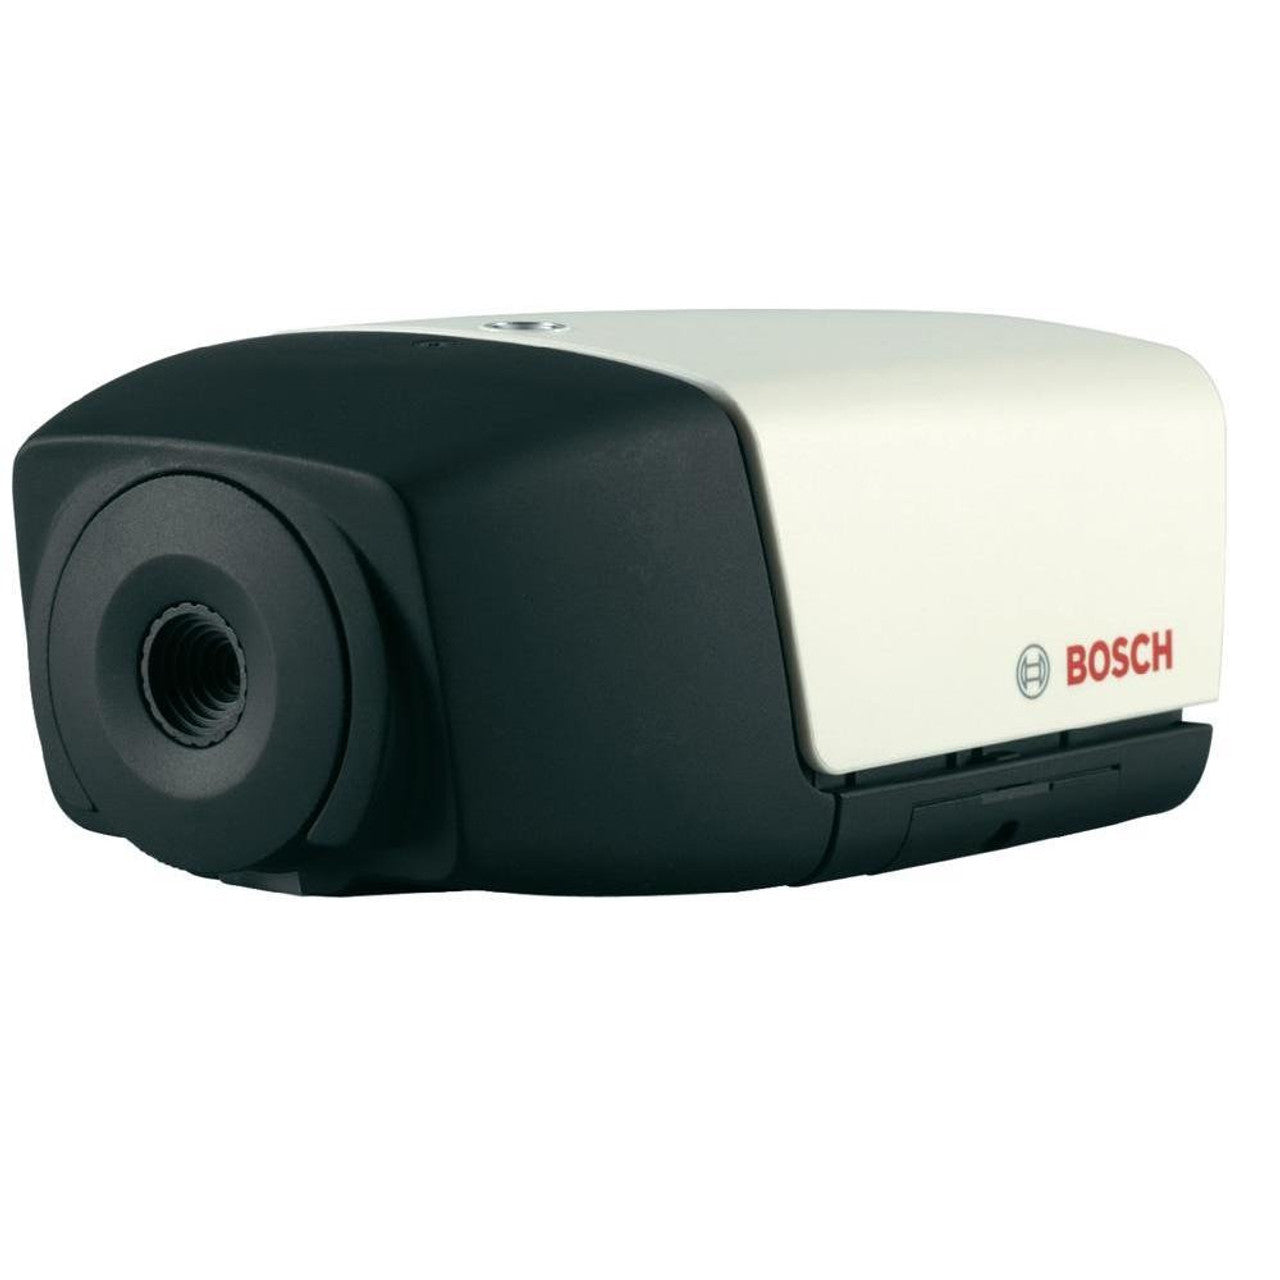 Bosch NBC225-P - IP Camera, 1/4" CMOS, VGA Colour, 12VDC / POE, W/4.9mm Fixed Lens